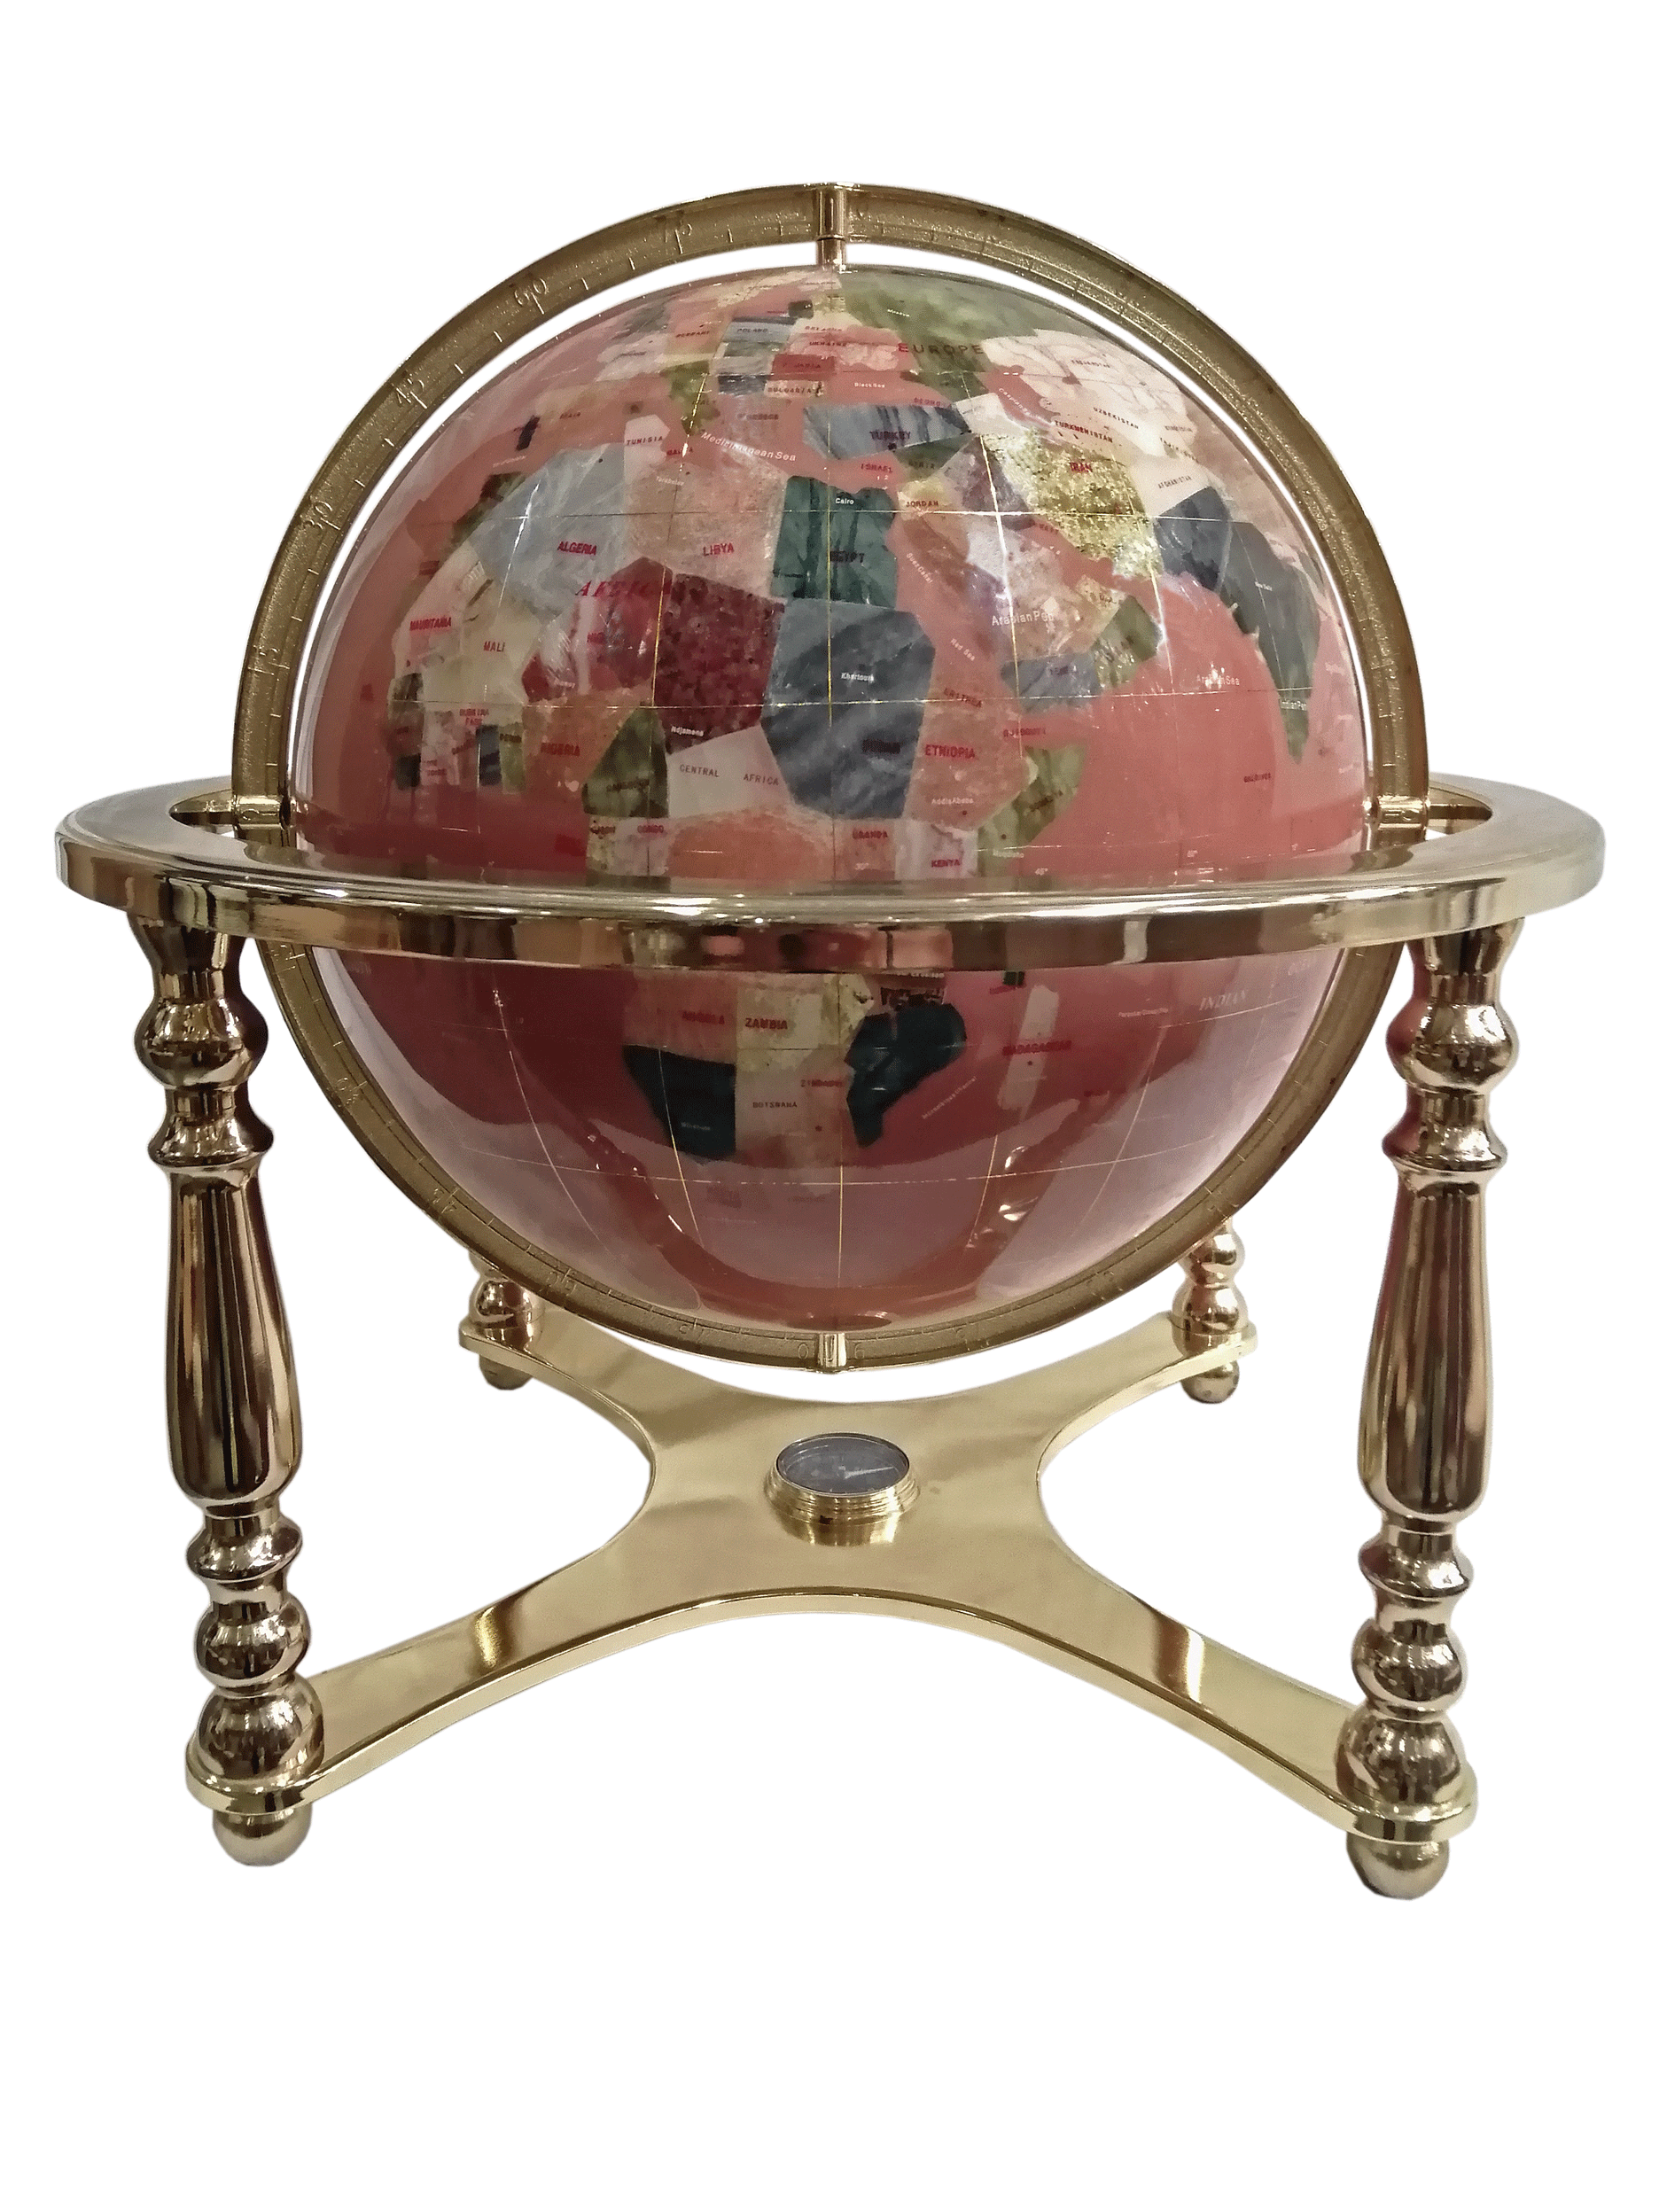 Gemstone globe tabletop 33 cm pink sand 4-legs stand gold finish